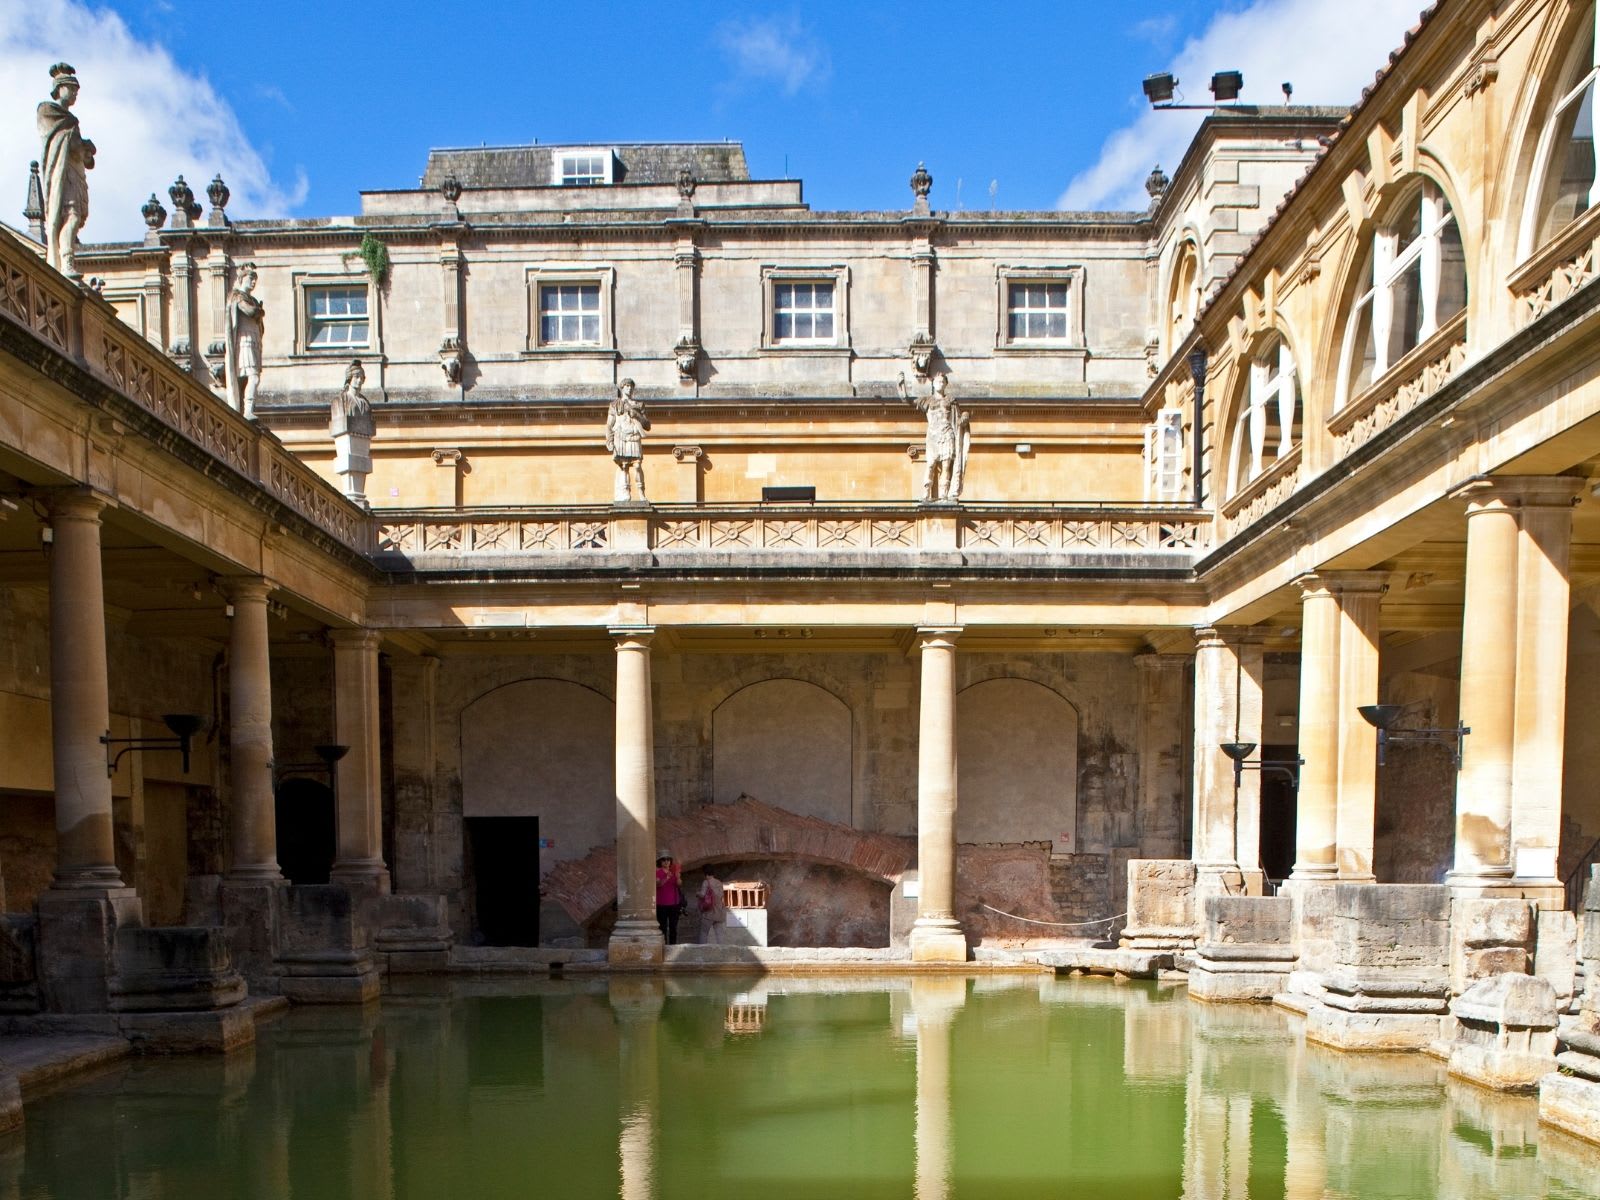 Inside The Roman Baths, Bath